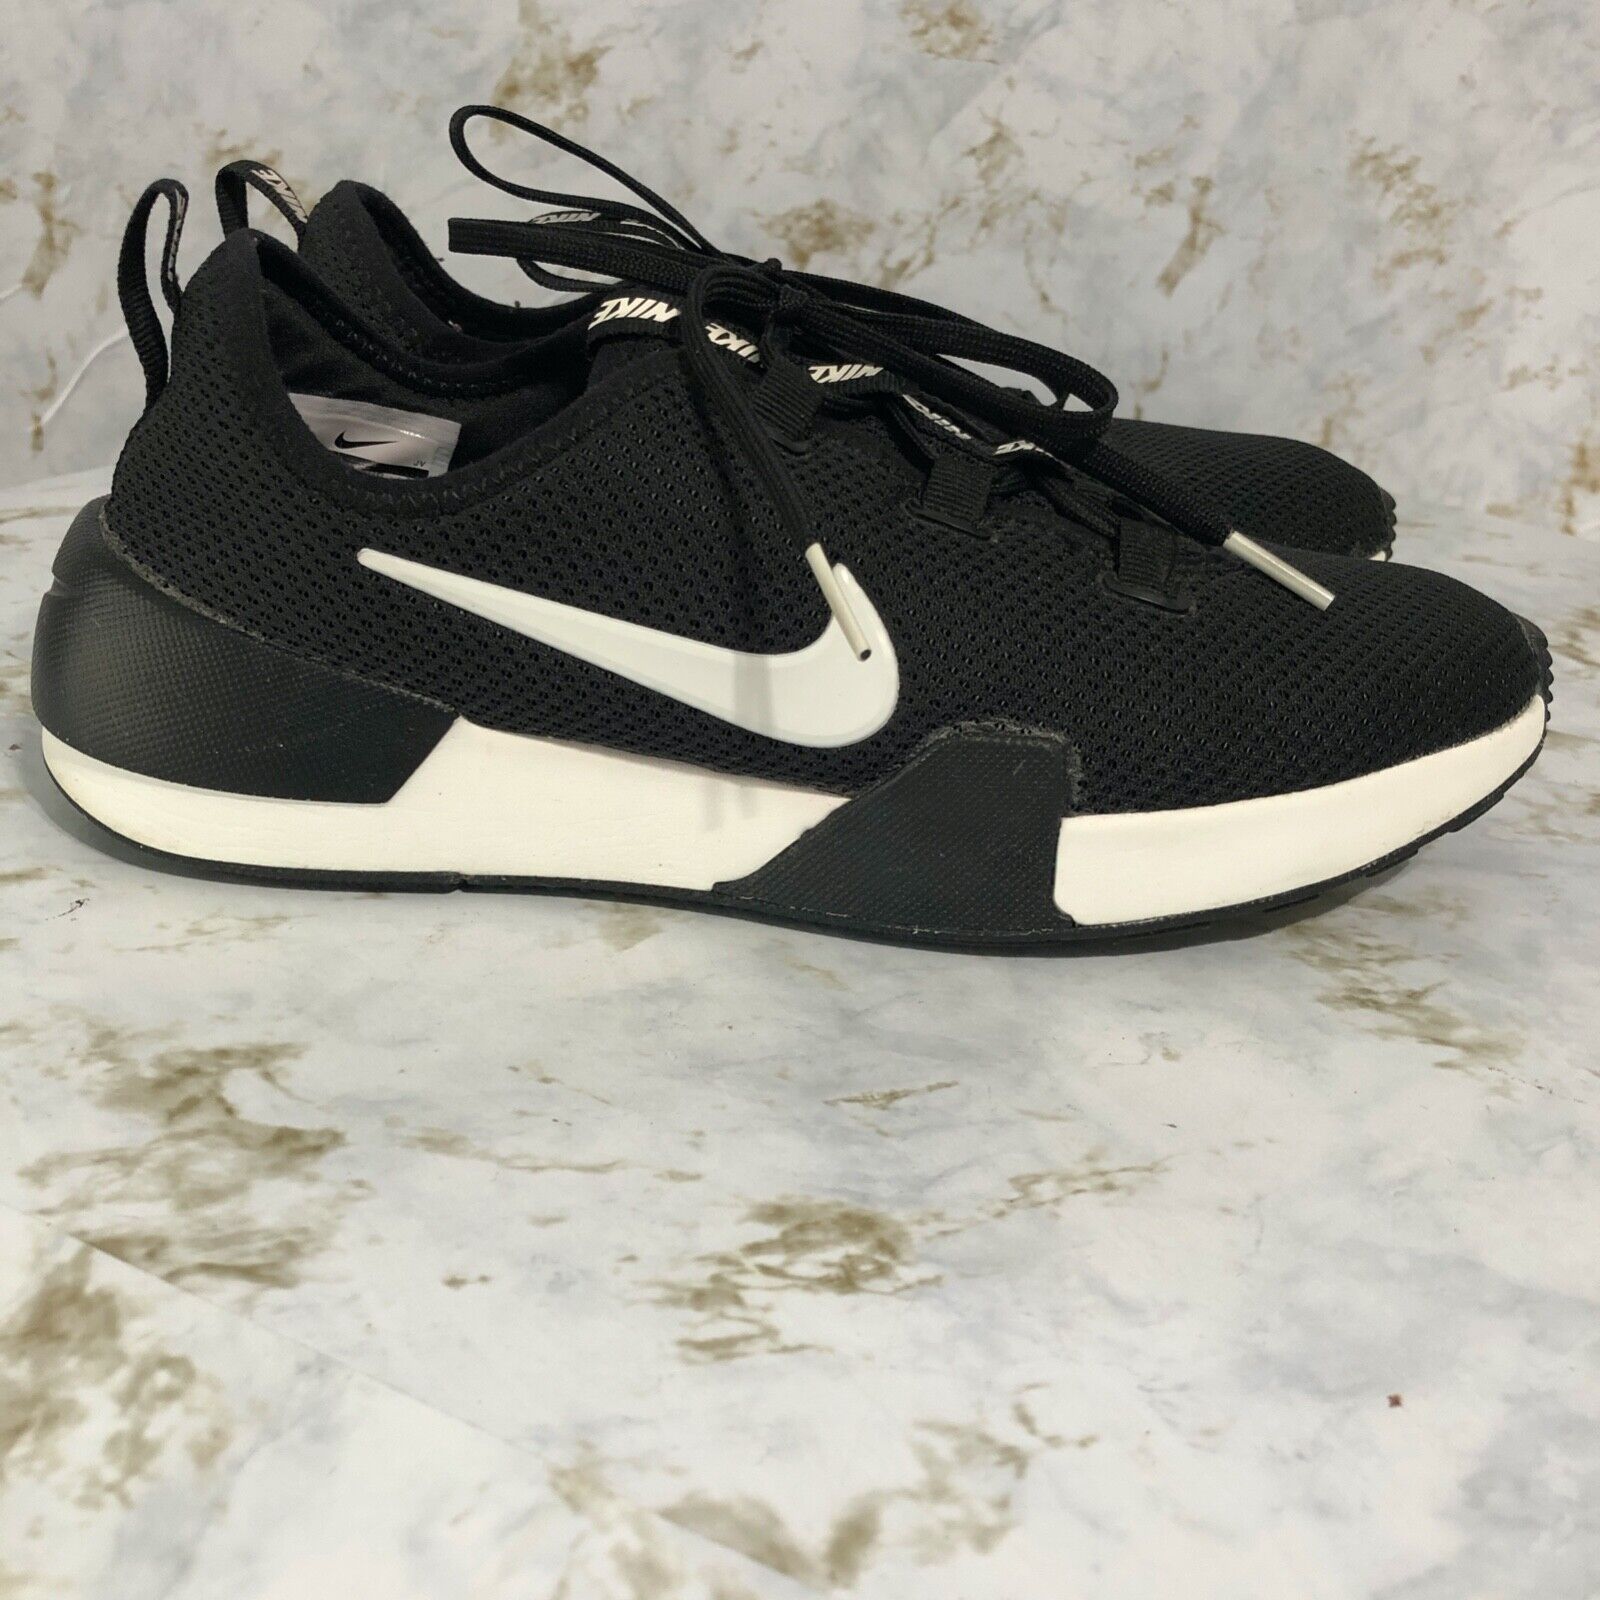 Malversar Joseph Banks sin Size 8.5 - Nike Ashin Modern Black White for sale online | eBay